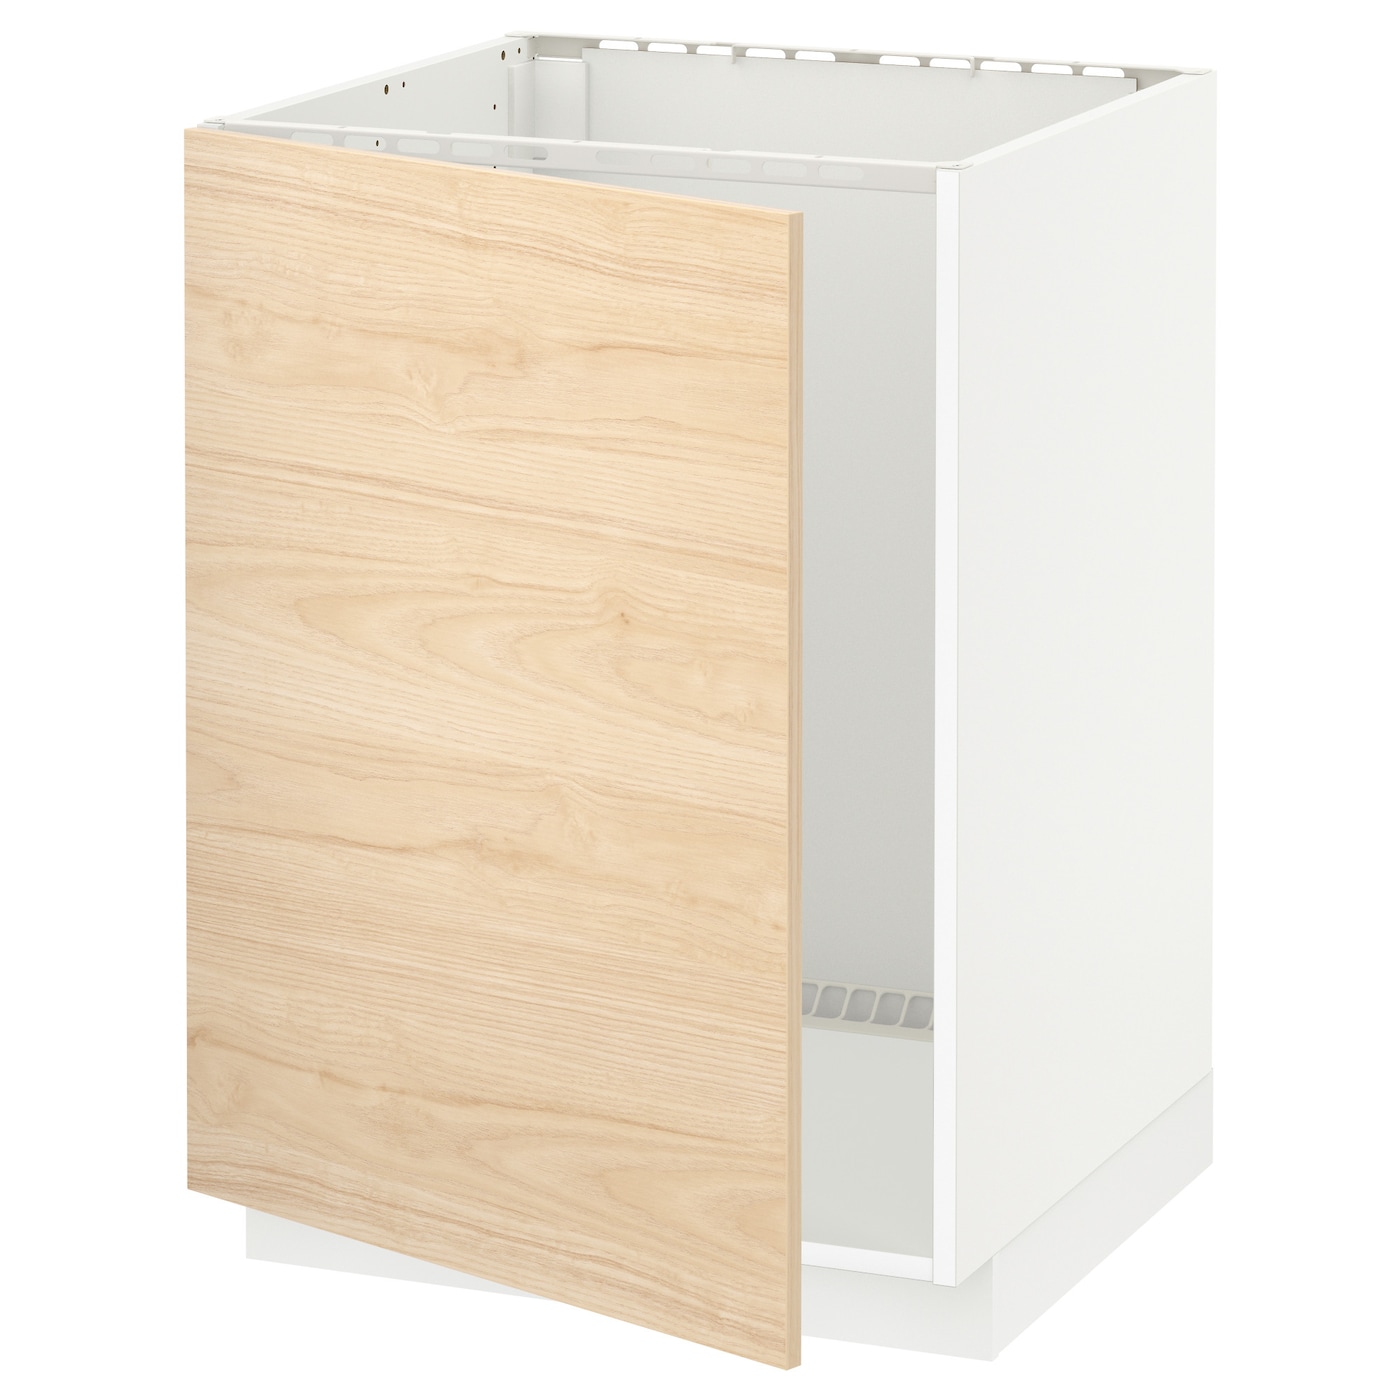 Шкаф под раковину  - IKEA METOD, 88x62x60см, белый/светлый ясень, МЕТОД ИКЕА